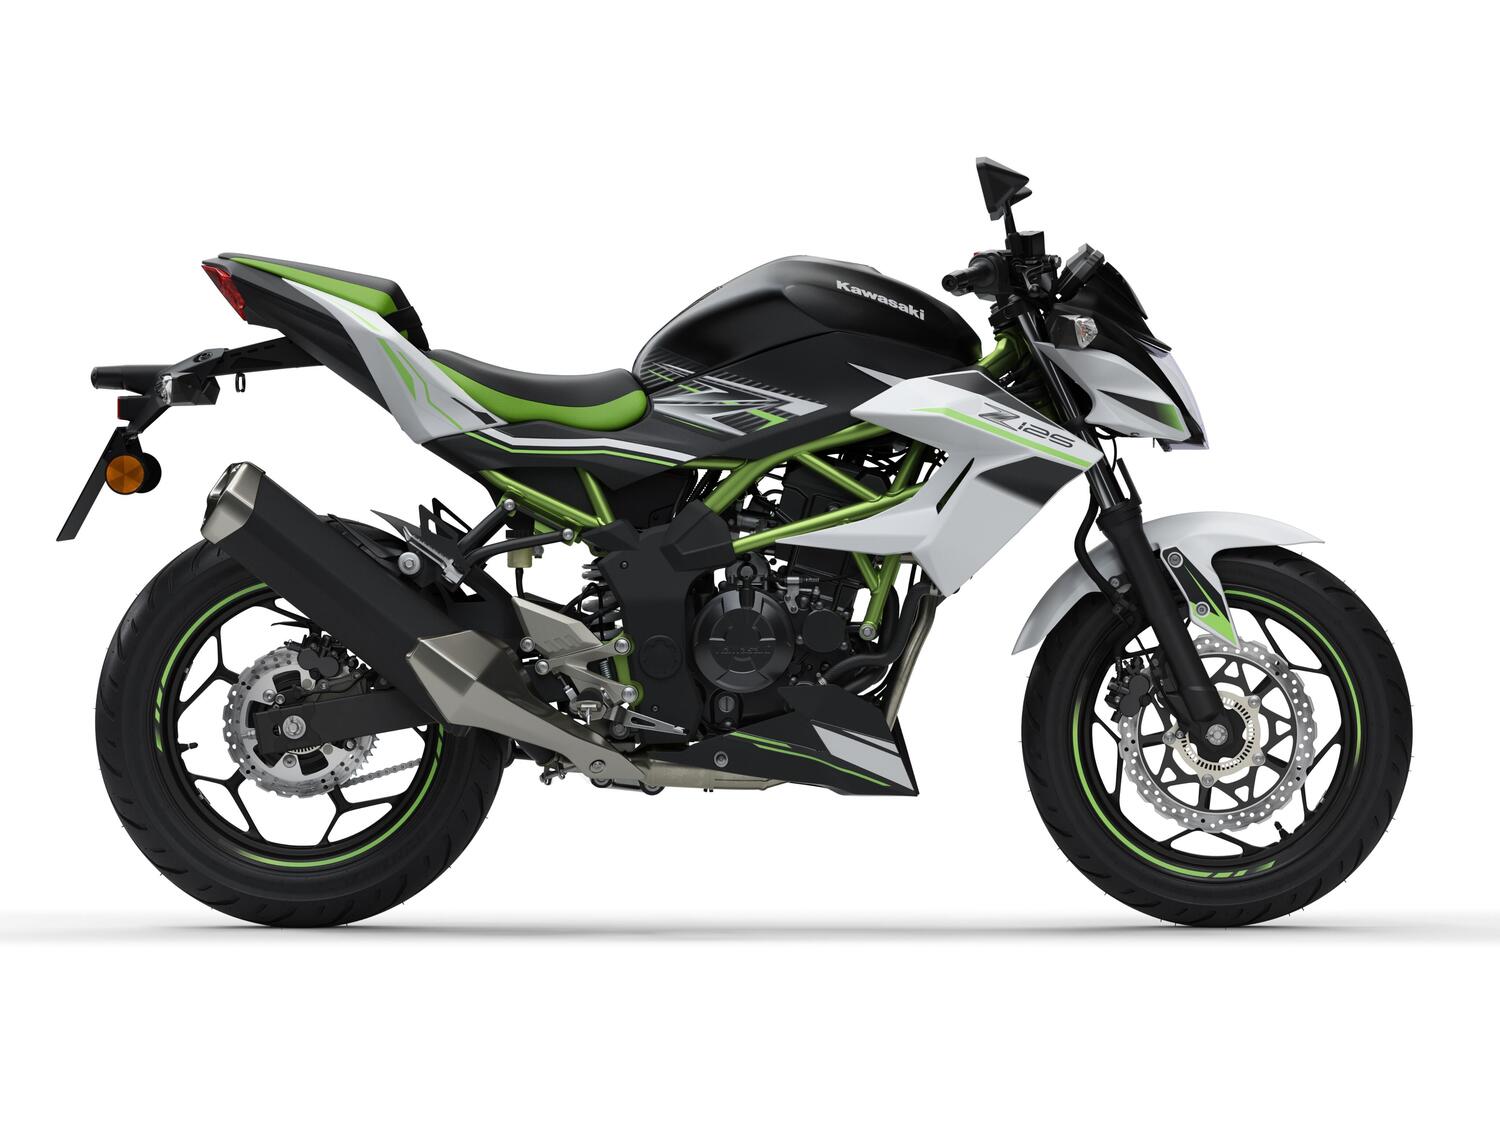 Kawasaki Z125 e Ninja 125 m.y. 2021 News Moto.it